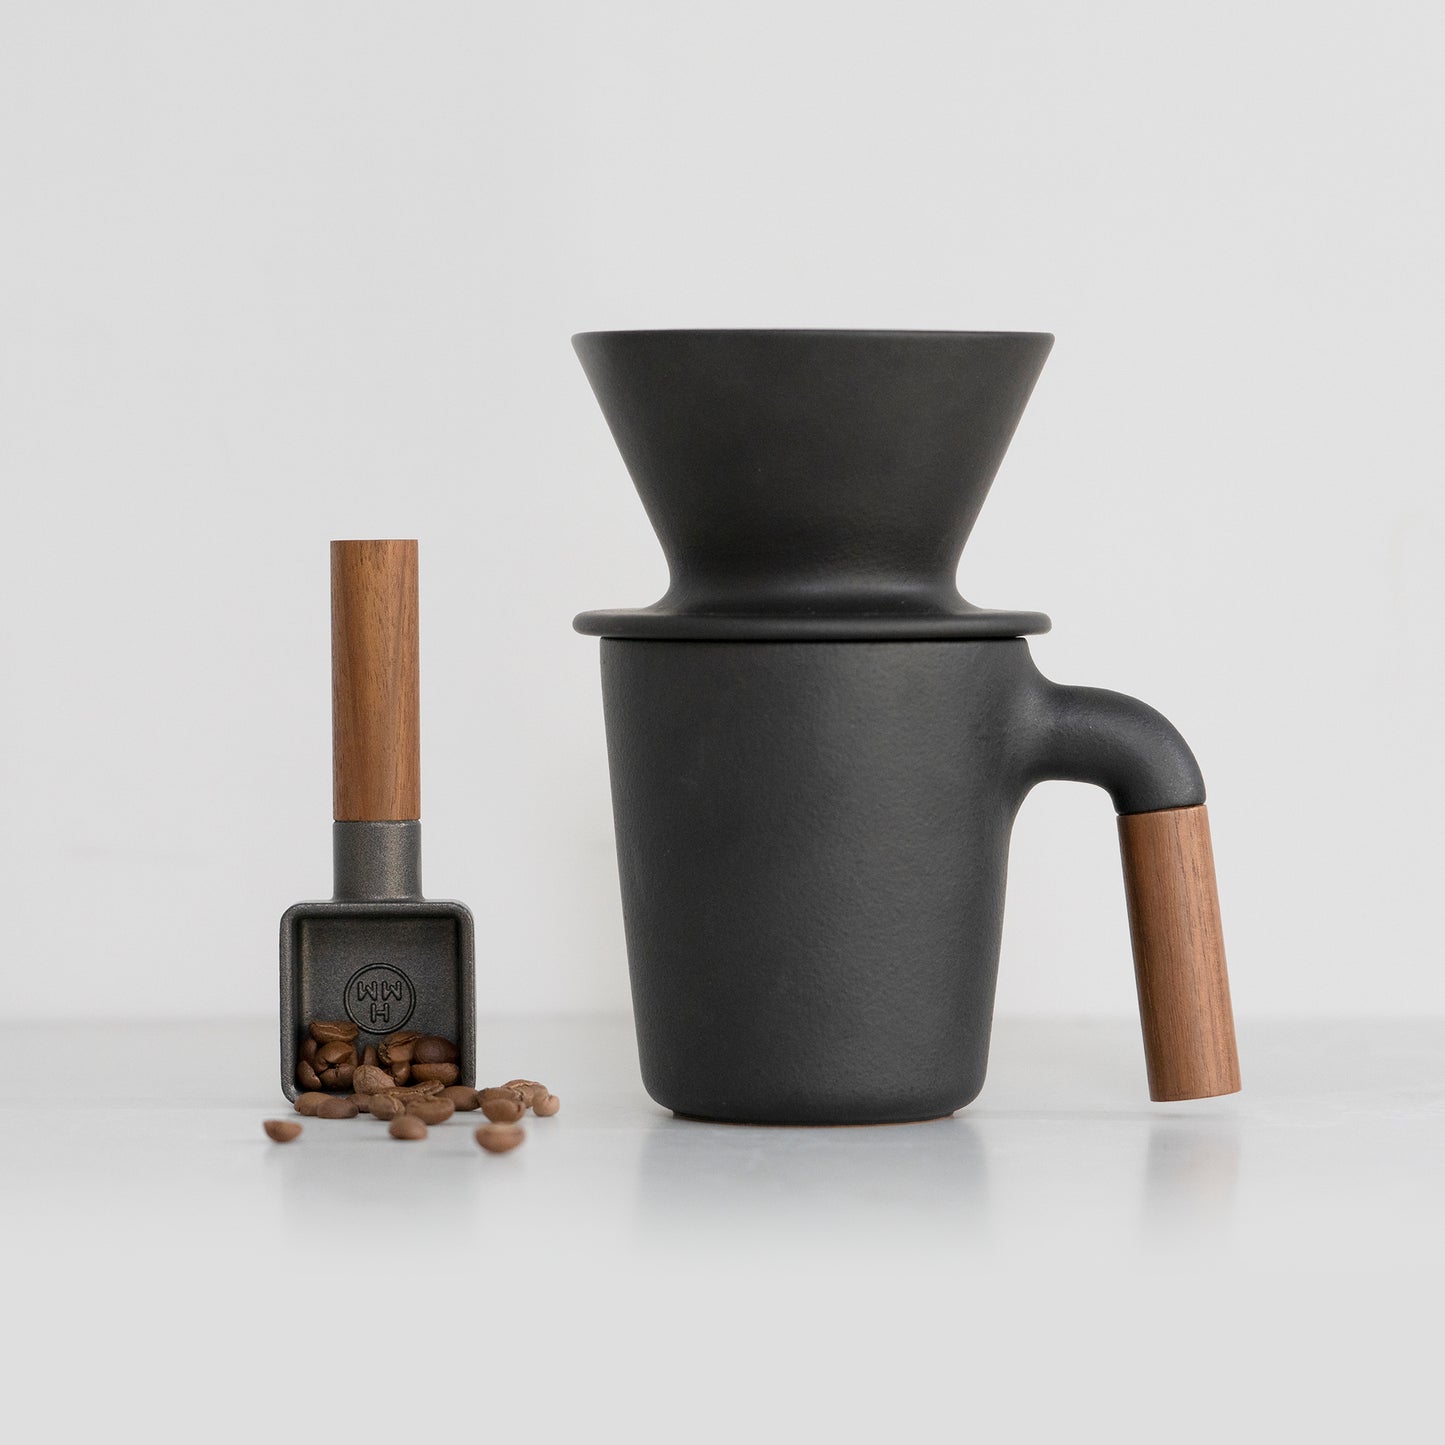 Ceramic coffee set - mug, dripper, and coffee scoop.